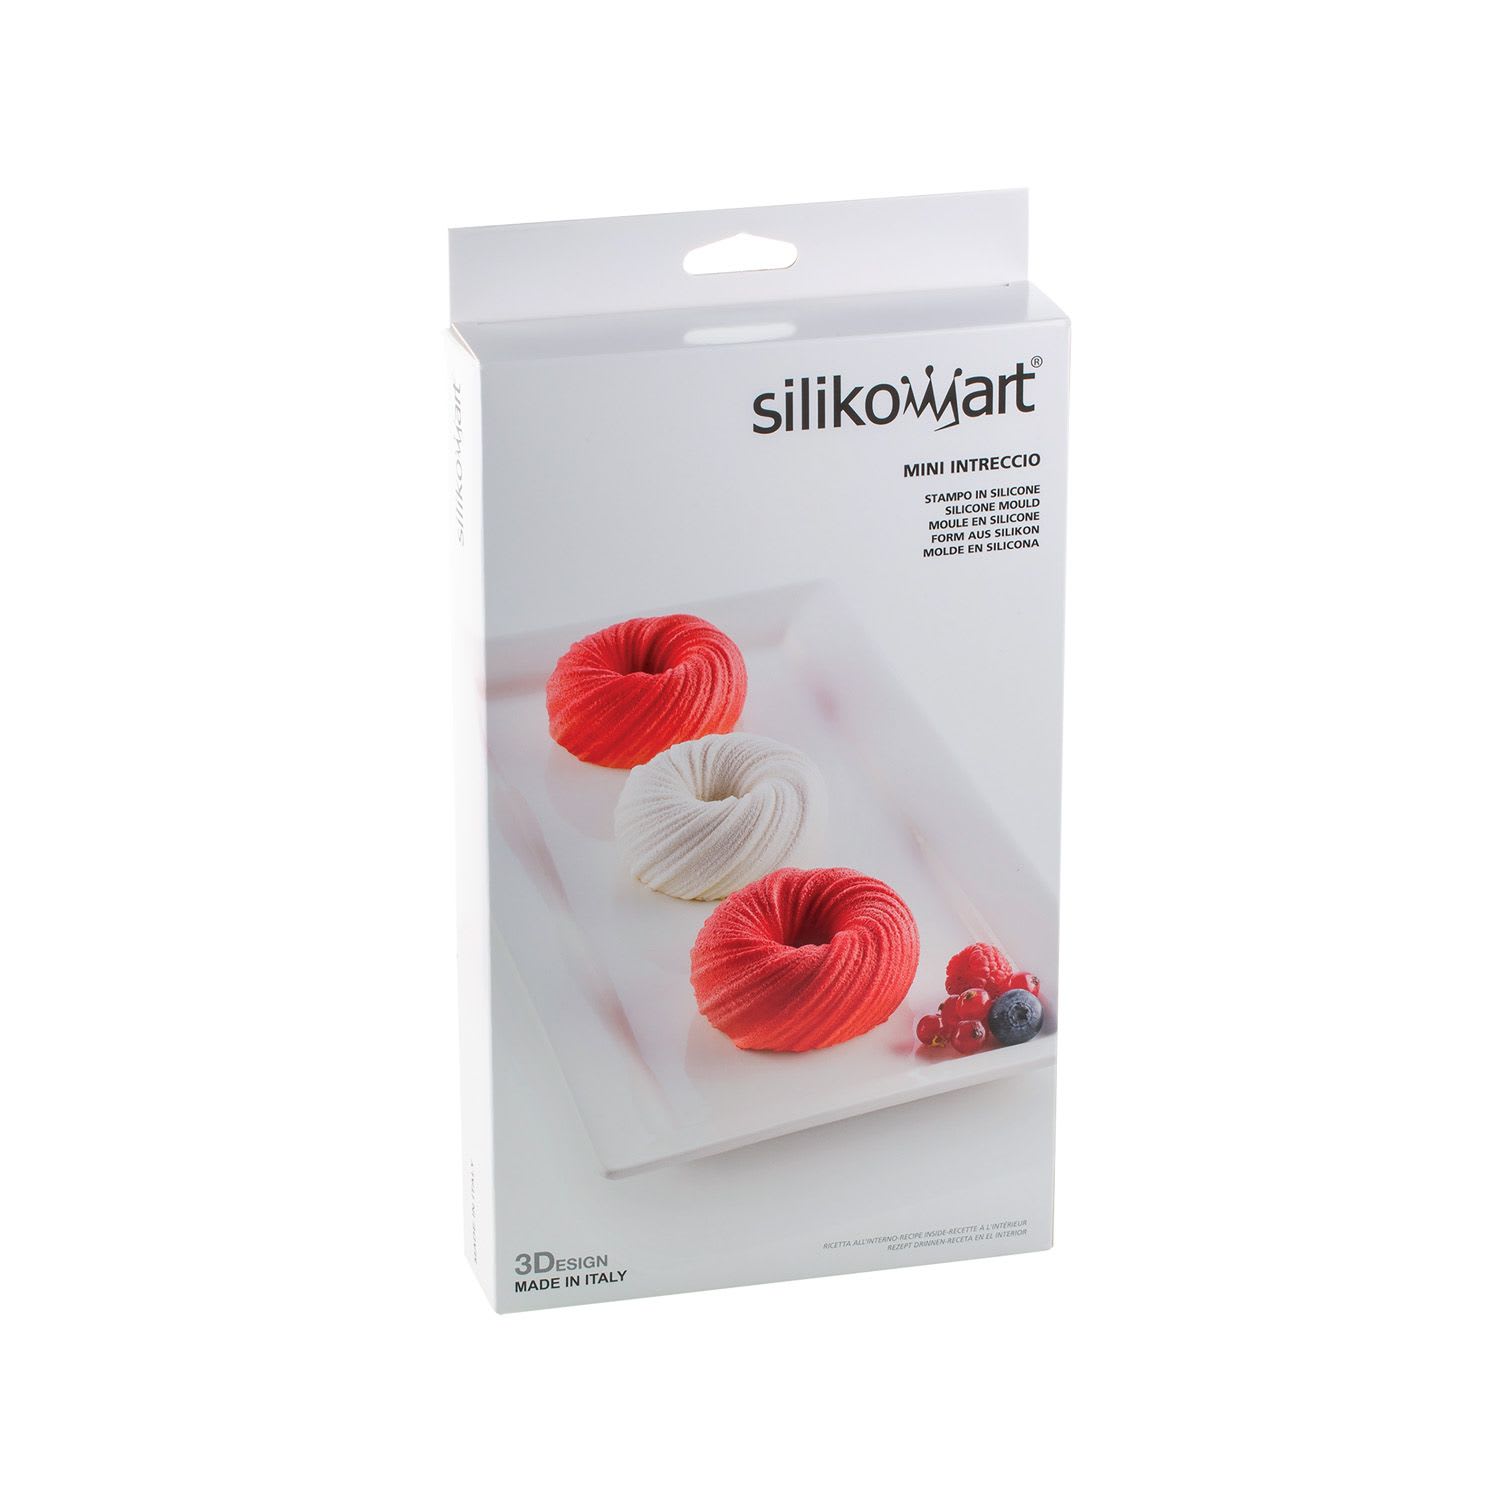 Intreccio Dough pans silicone - Silikomart 20.384.13.0065